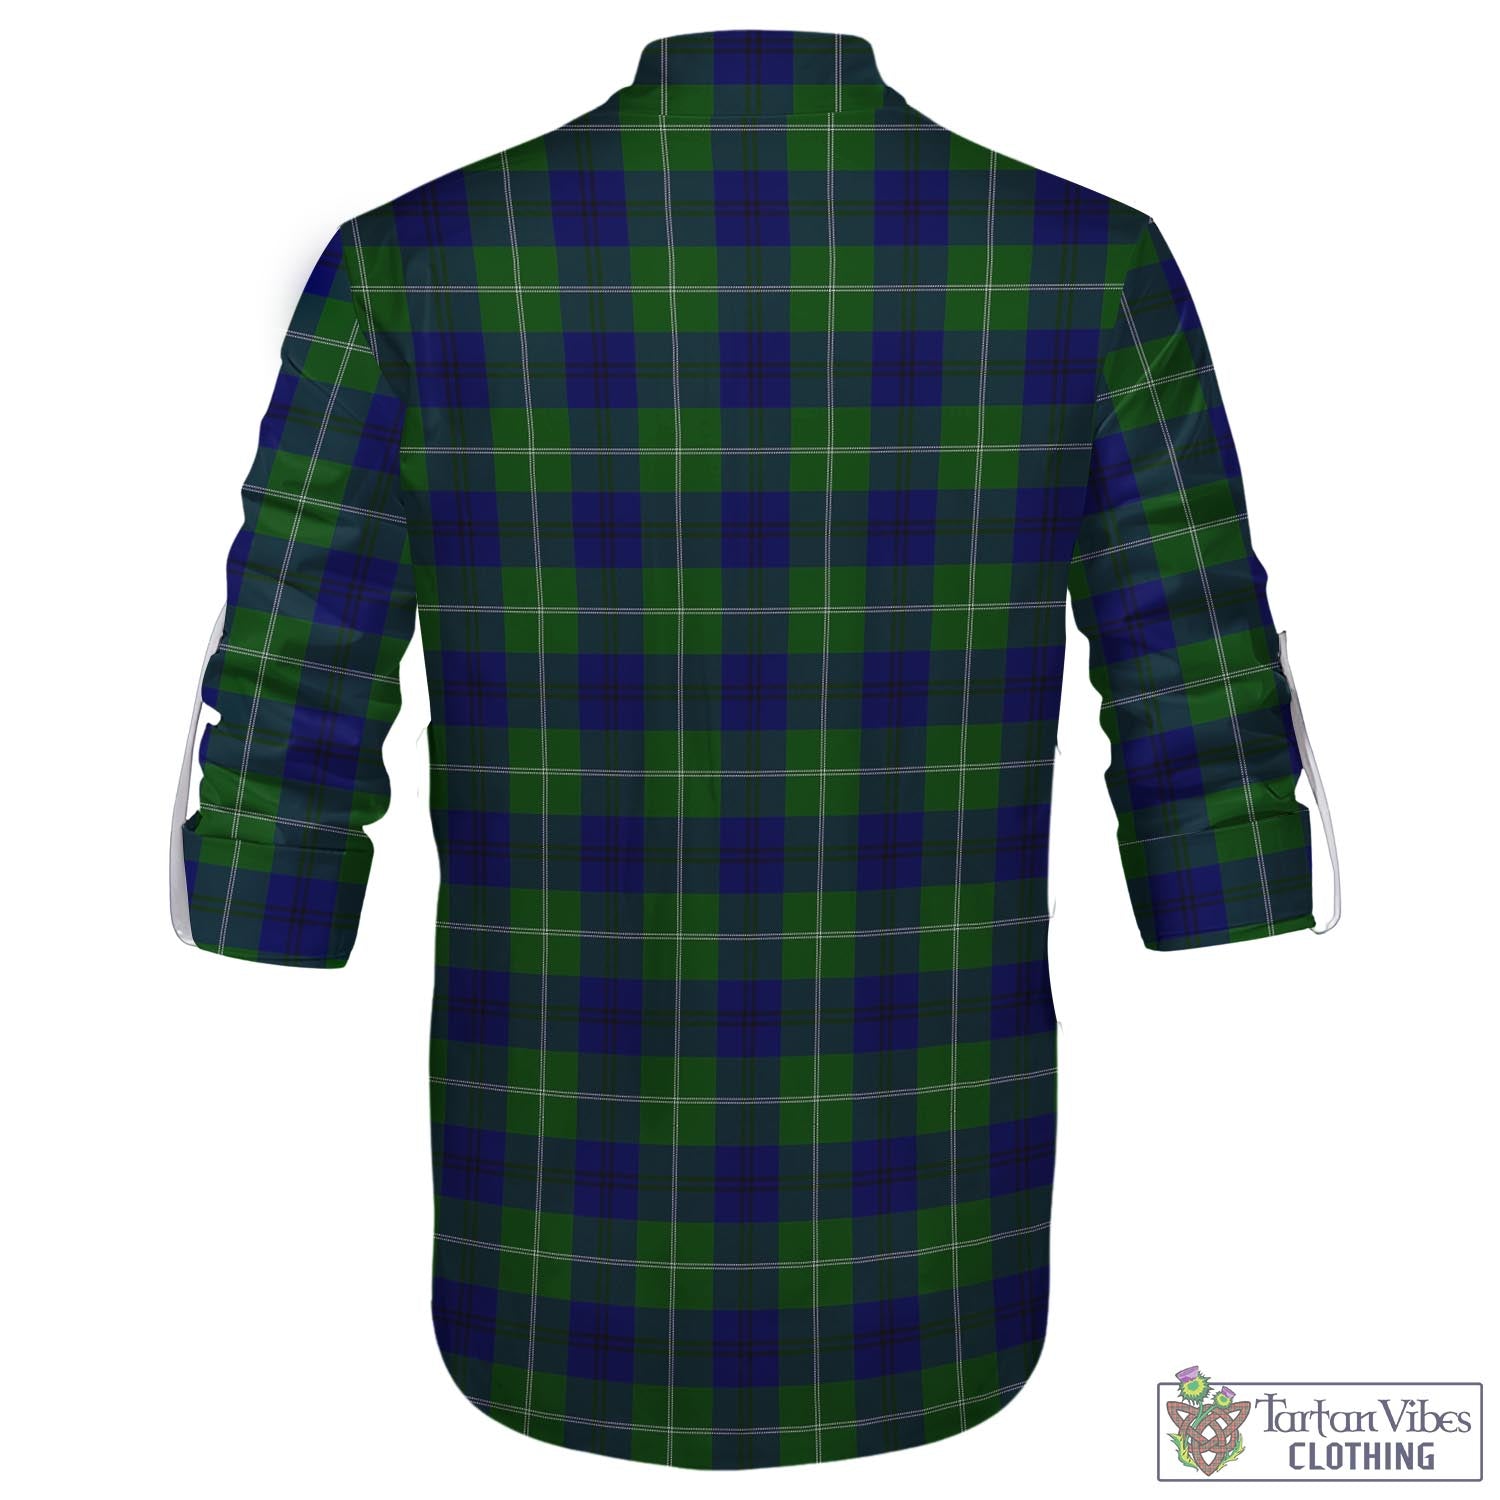 Tartan Vibes Clothing Oliphant Modern Tartan Men's Scottish Traditional Jacobite Ghillie Kilt Shirt